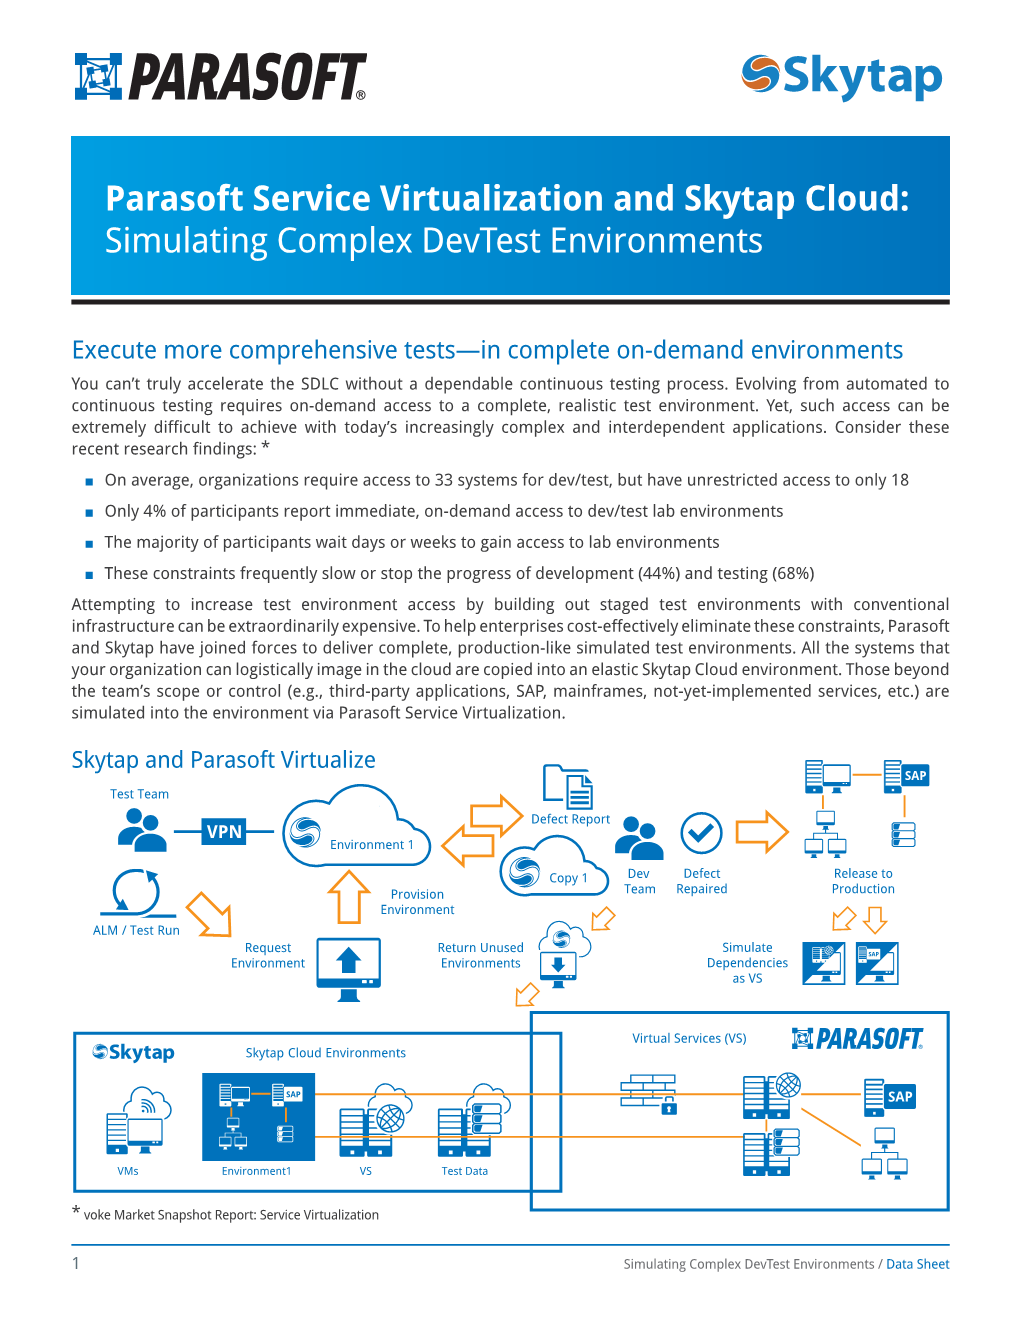 Parasoft Service Virtualization and Skytap Cloud: Simulating Complex Devtest Environments